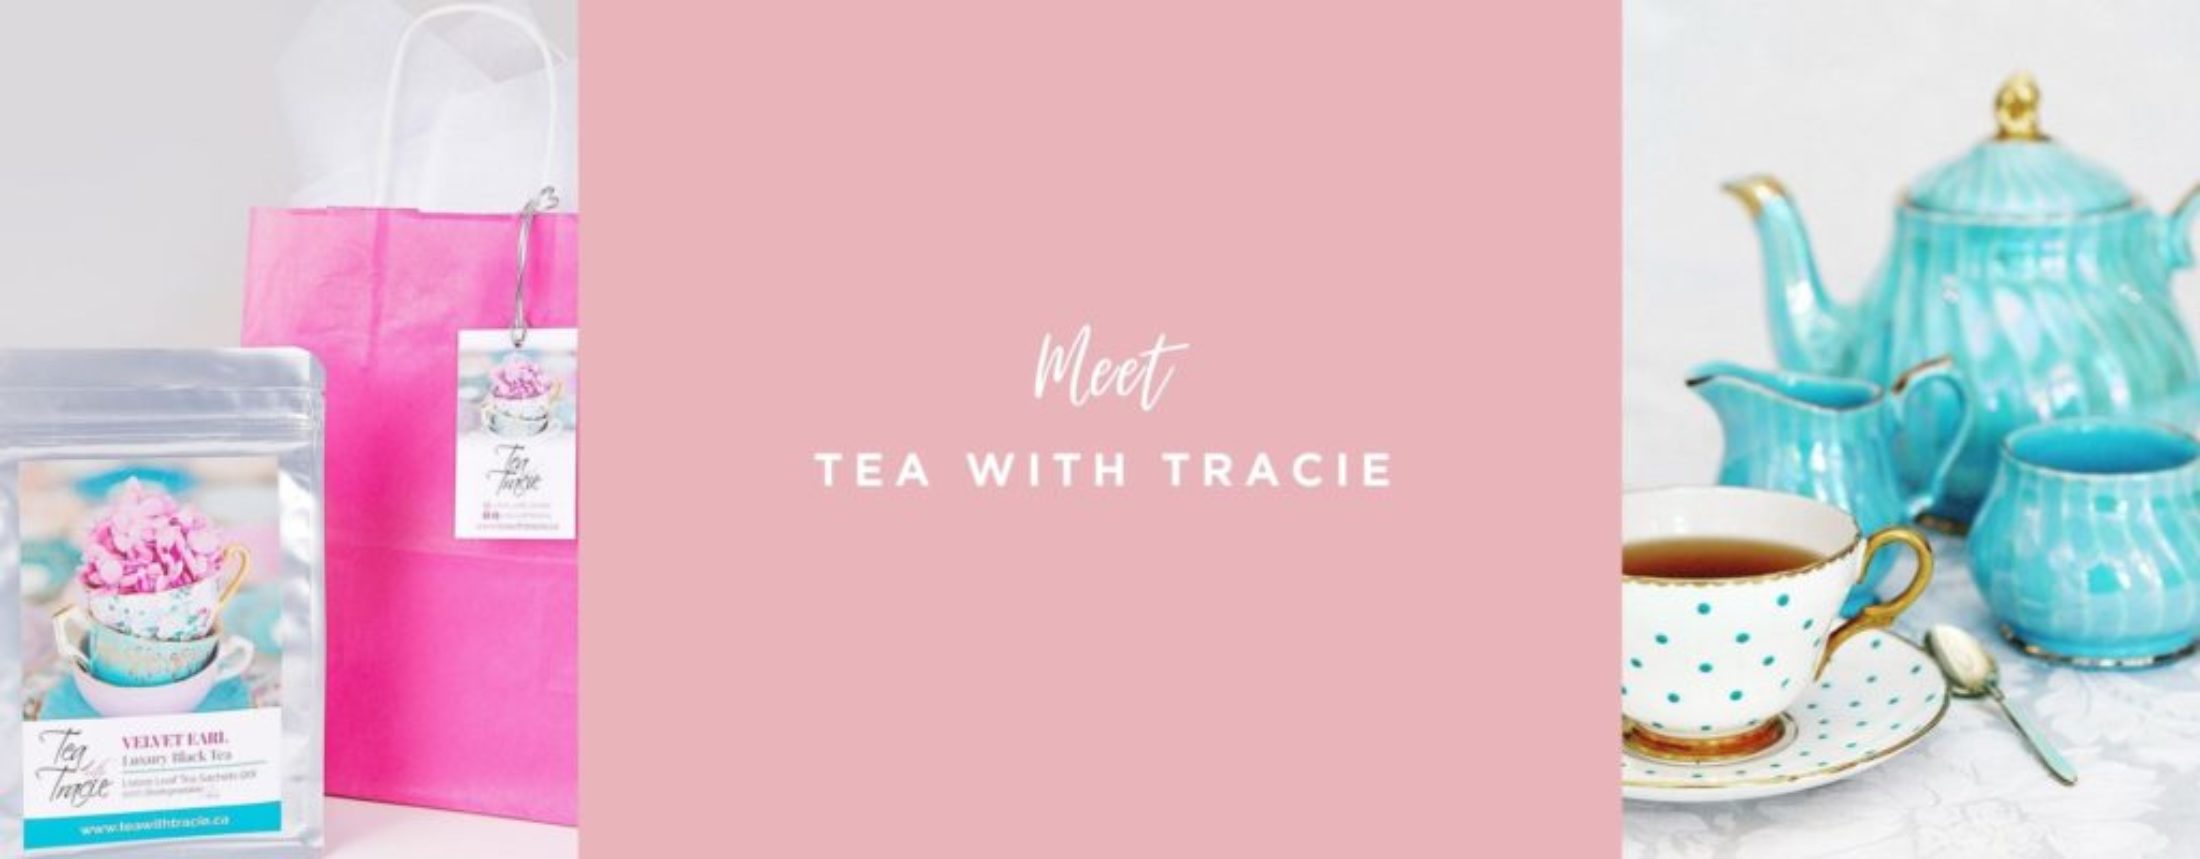 Meet Tea with Tracie